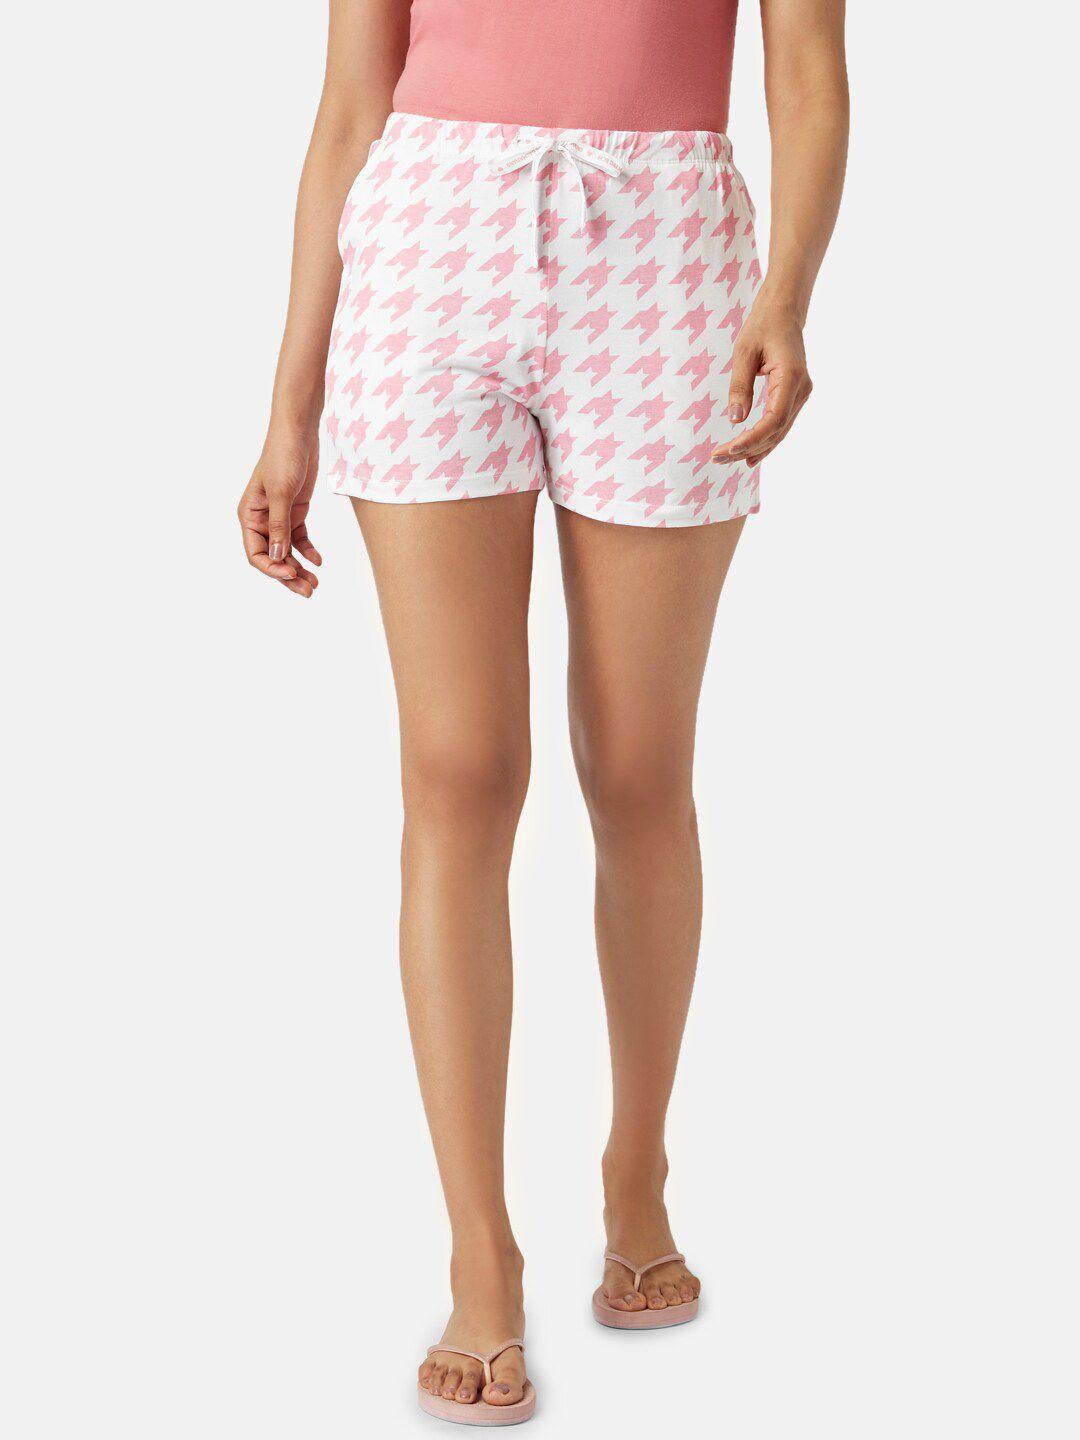 dreamz-by-pantaloons-printed-cotton-lounge-shorts